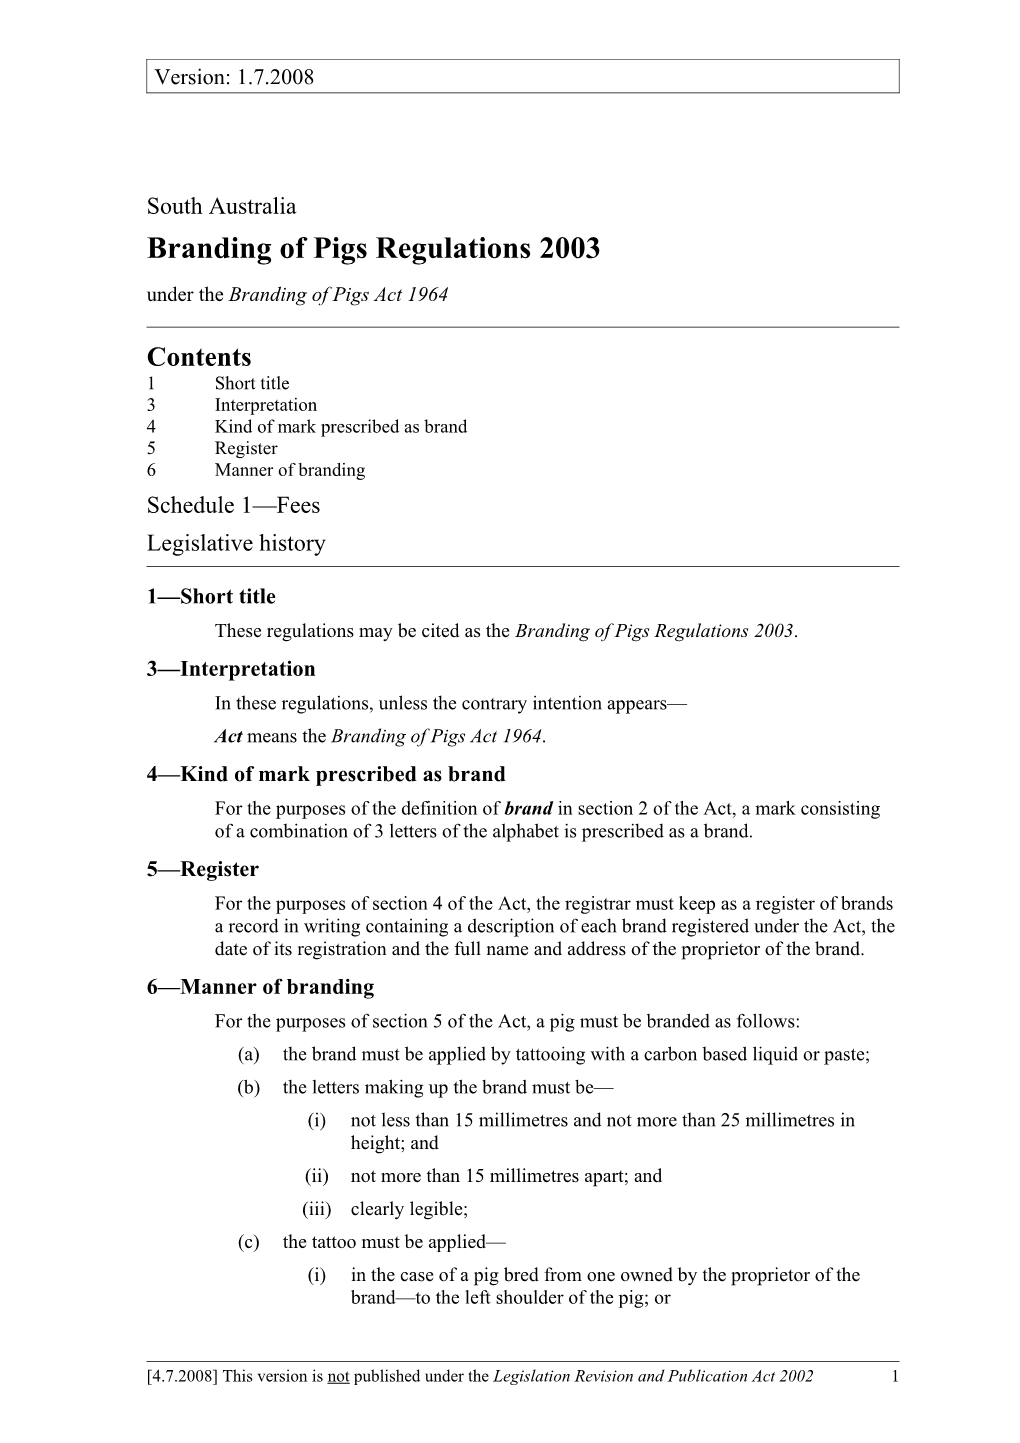 Branding of Pigs Regulations2003